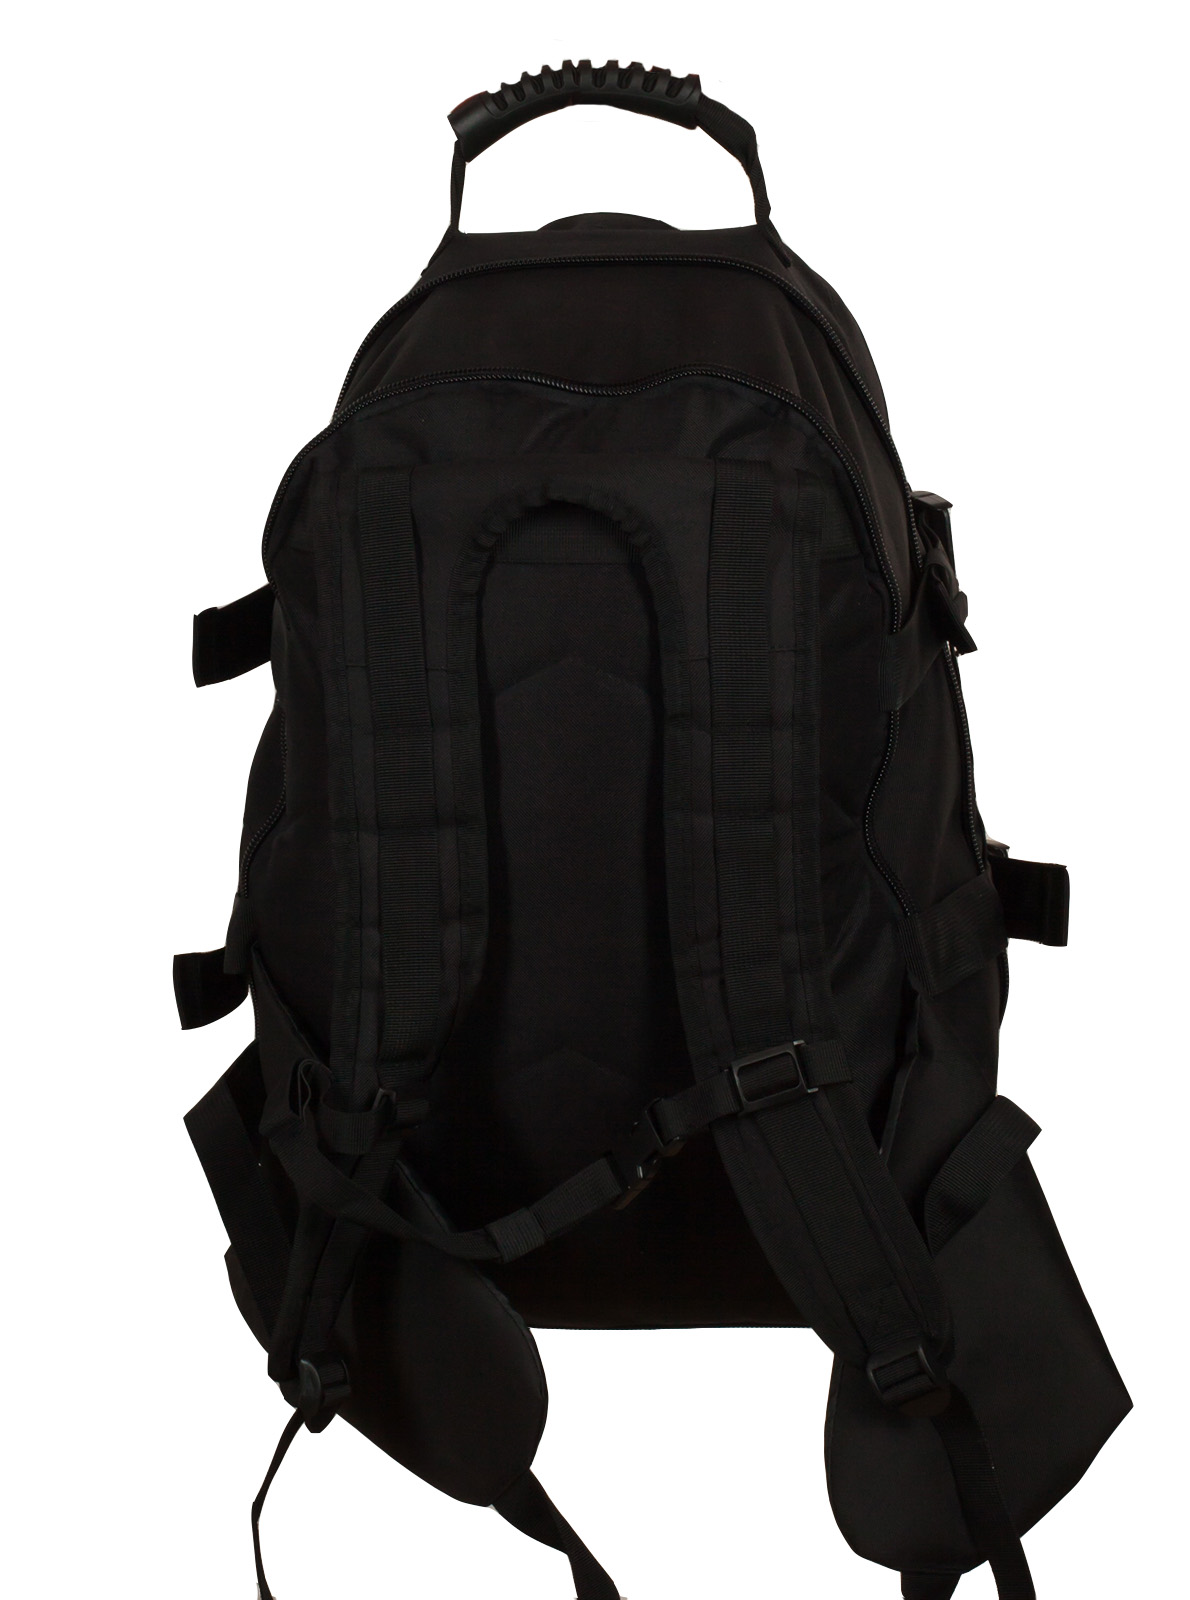 Черный армейский рюкзак 3-Day Expandable Backpack 08002A Black с эмблемой СССР 